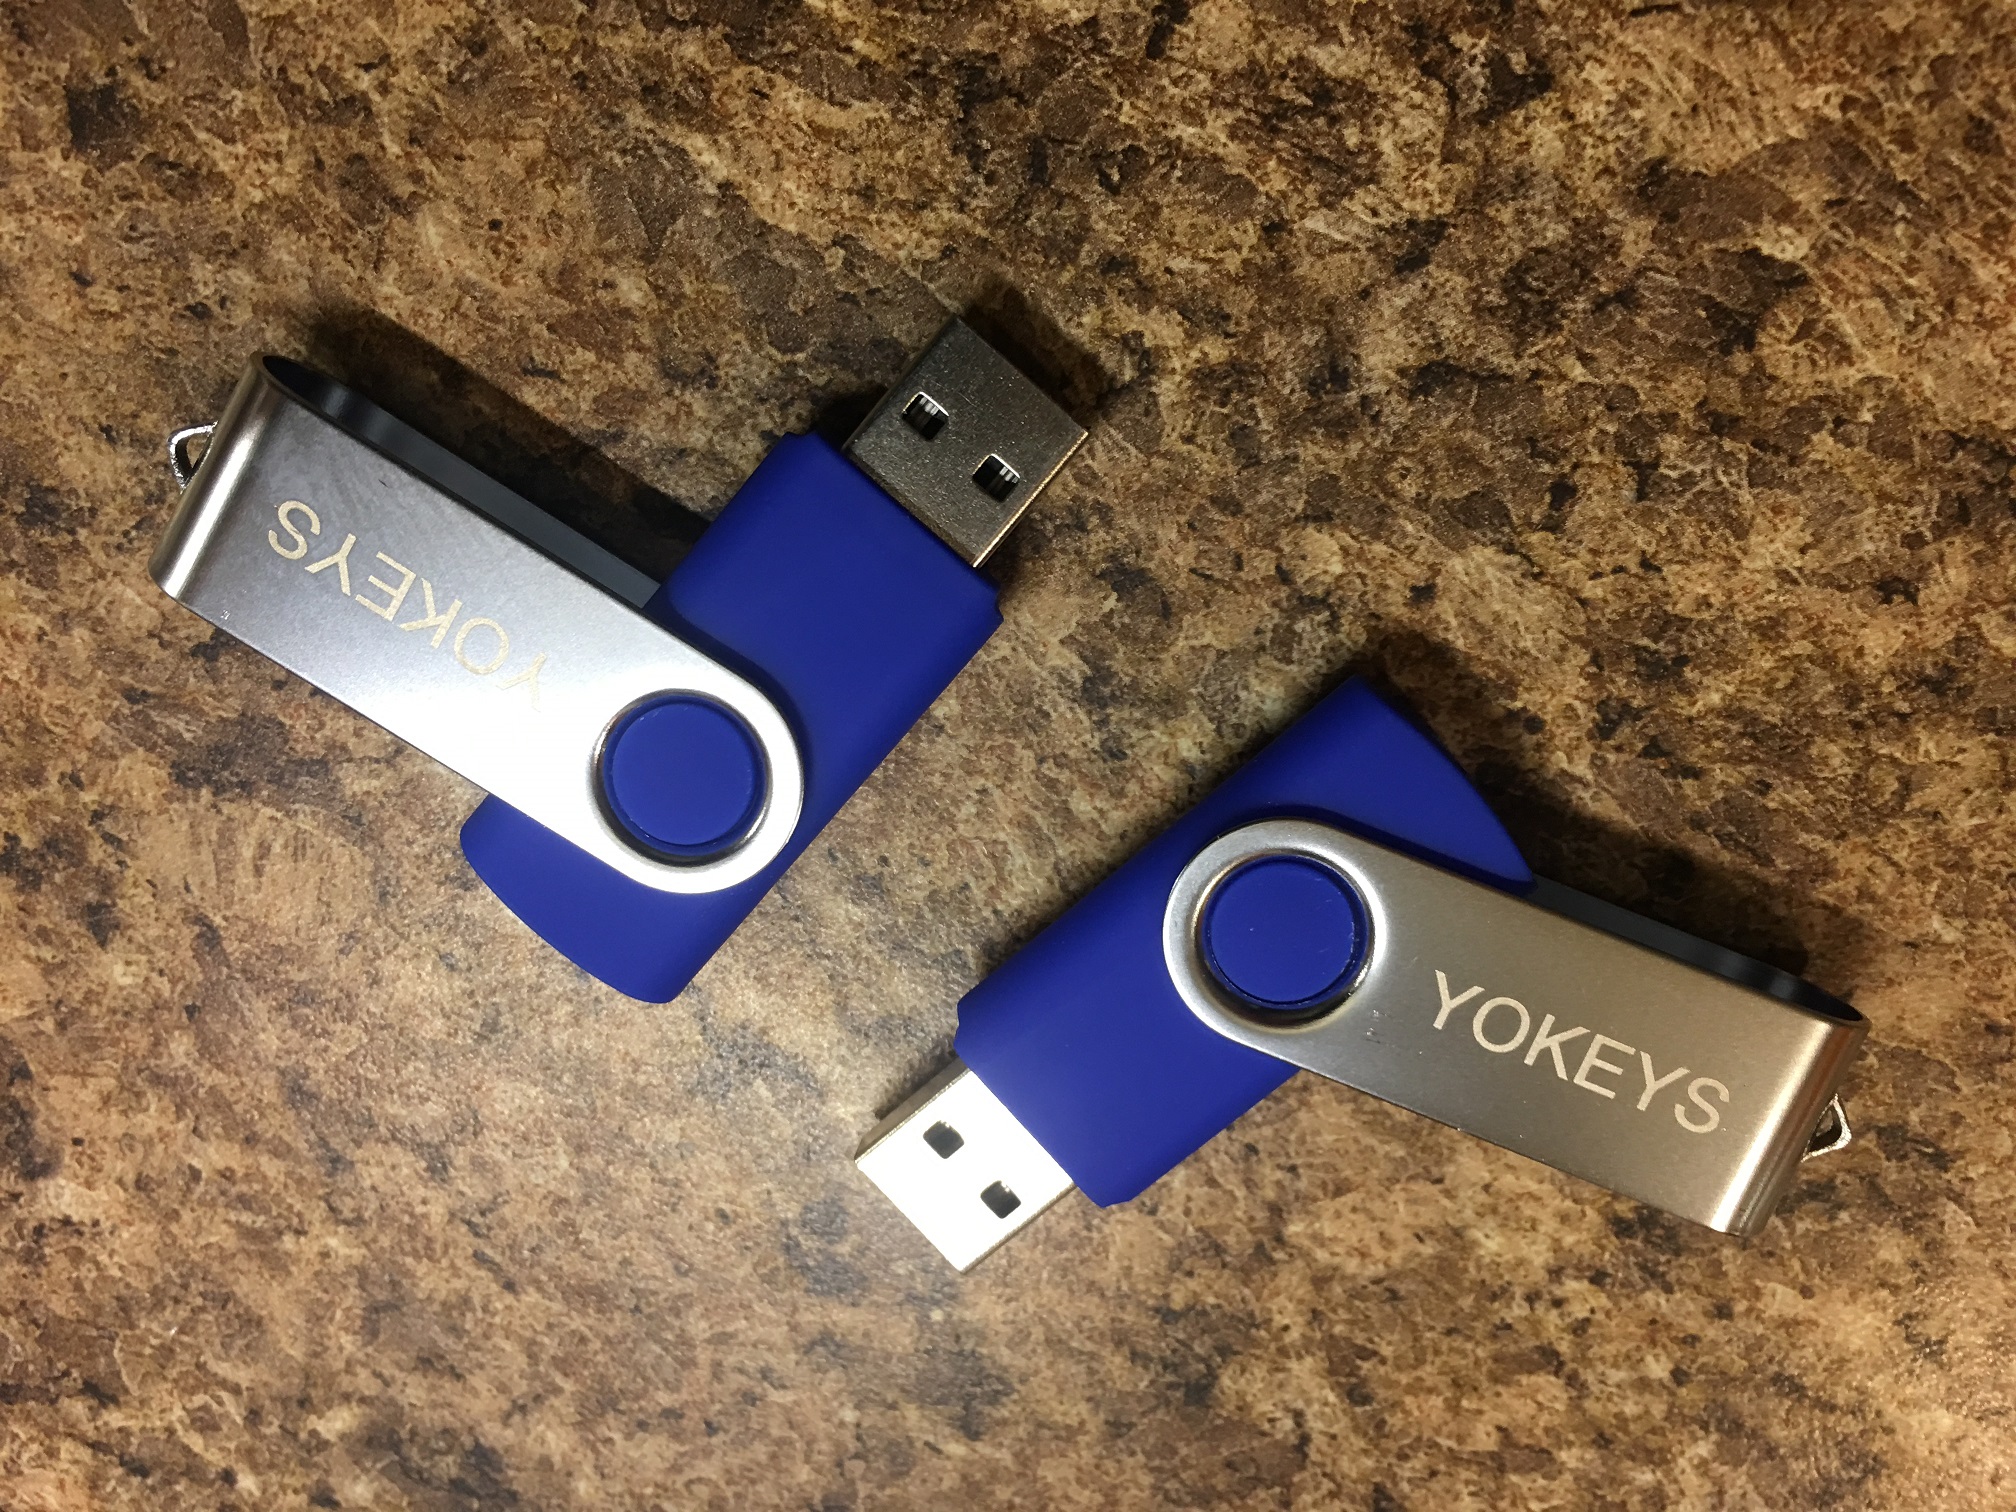 Handy little flip-open flash drives